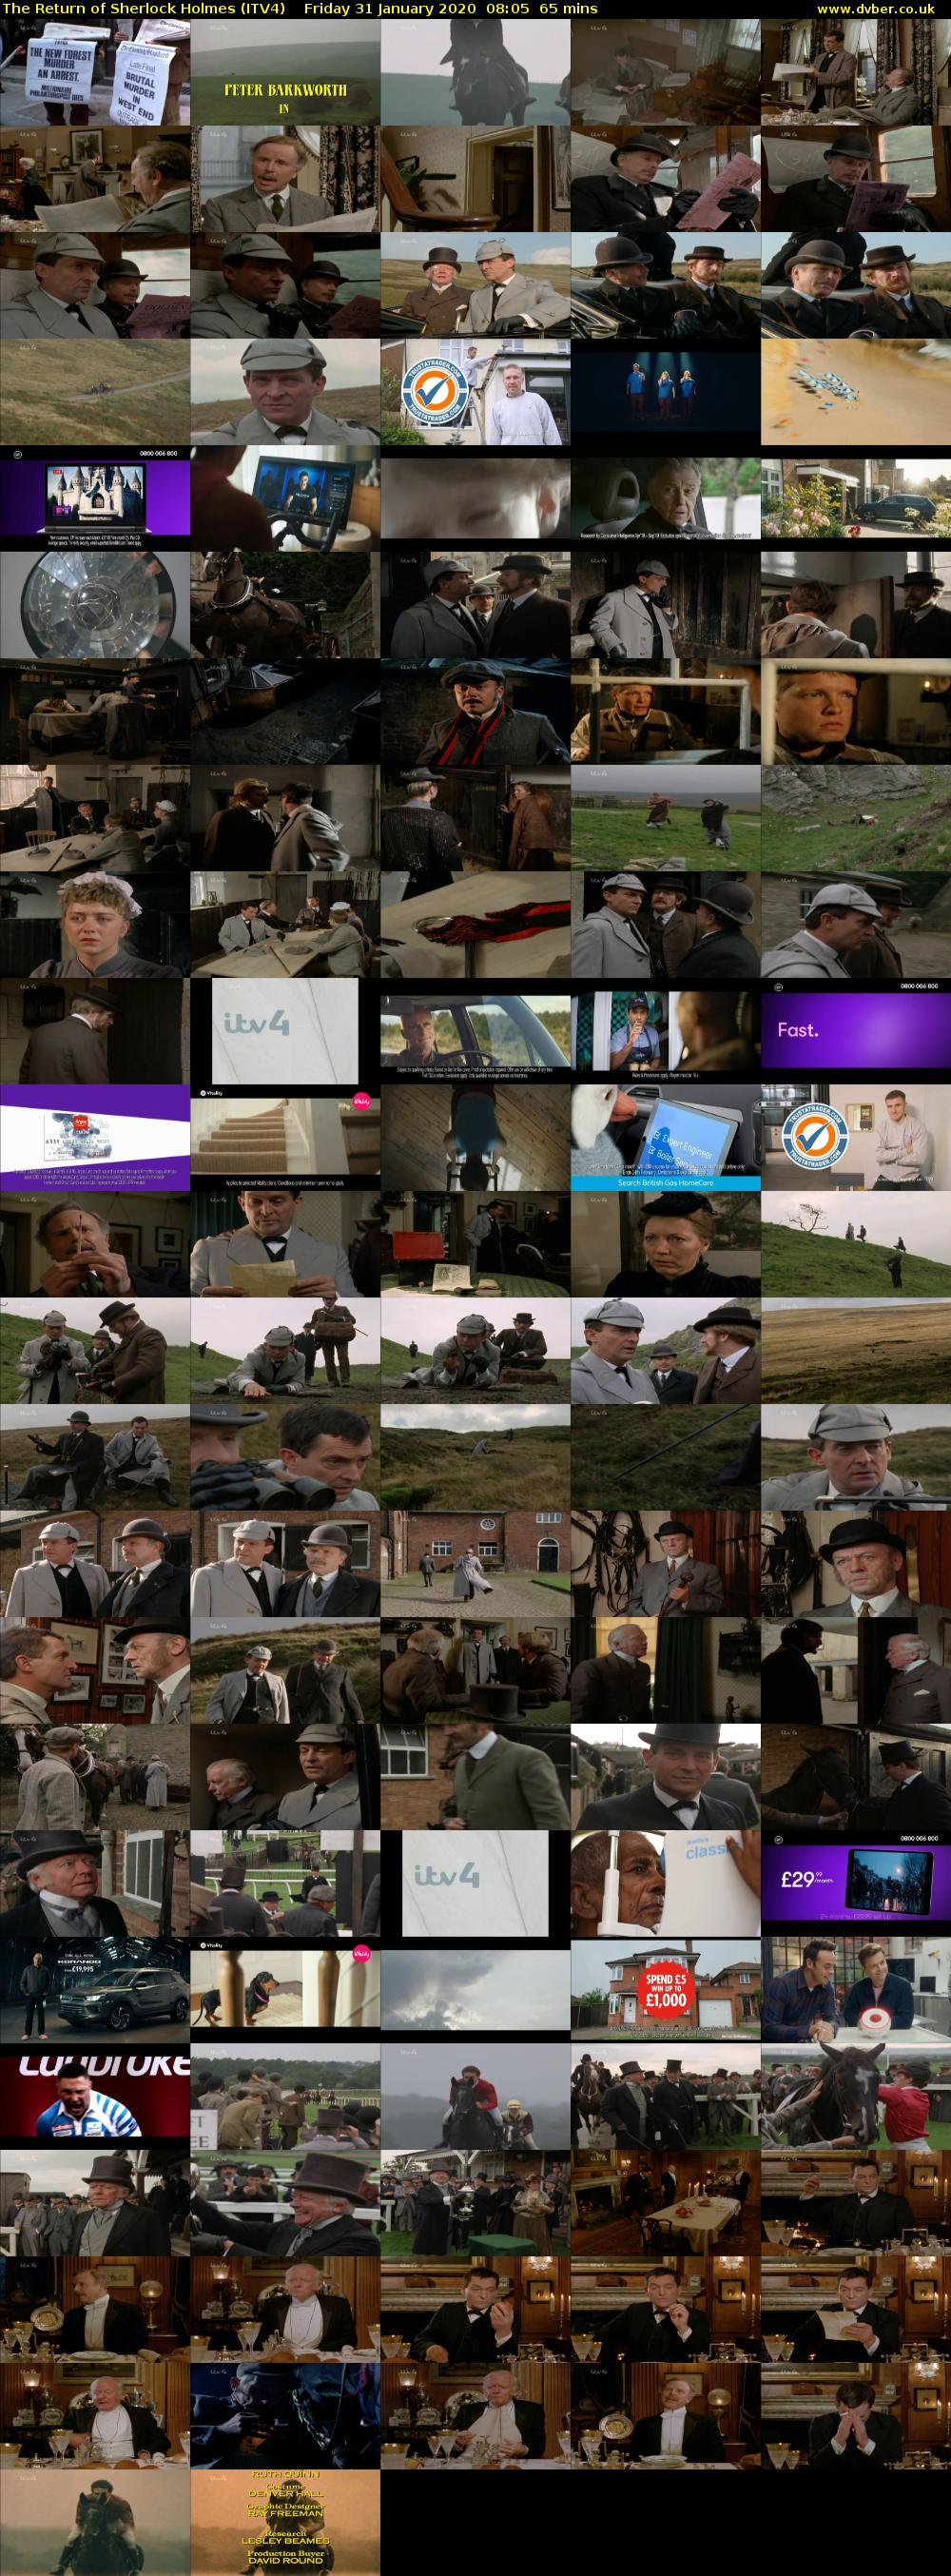 The Return of Sherlock Holmes (ITV4) Friday 31 January 2020 08:05 - 09:10